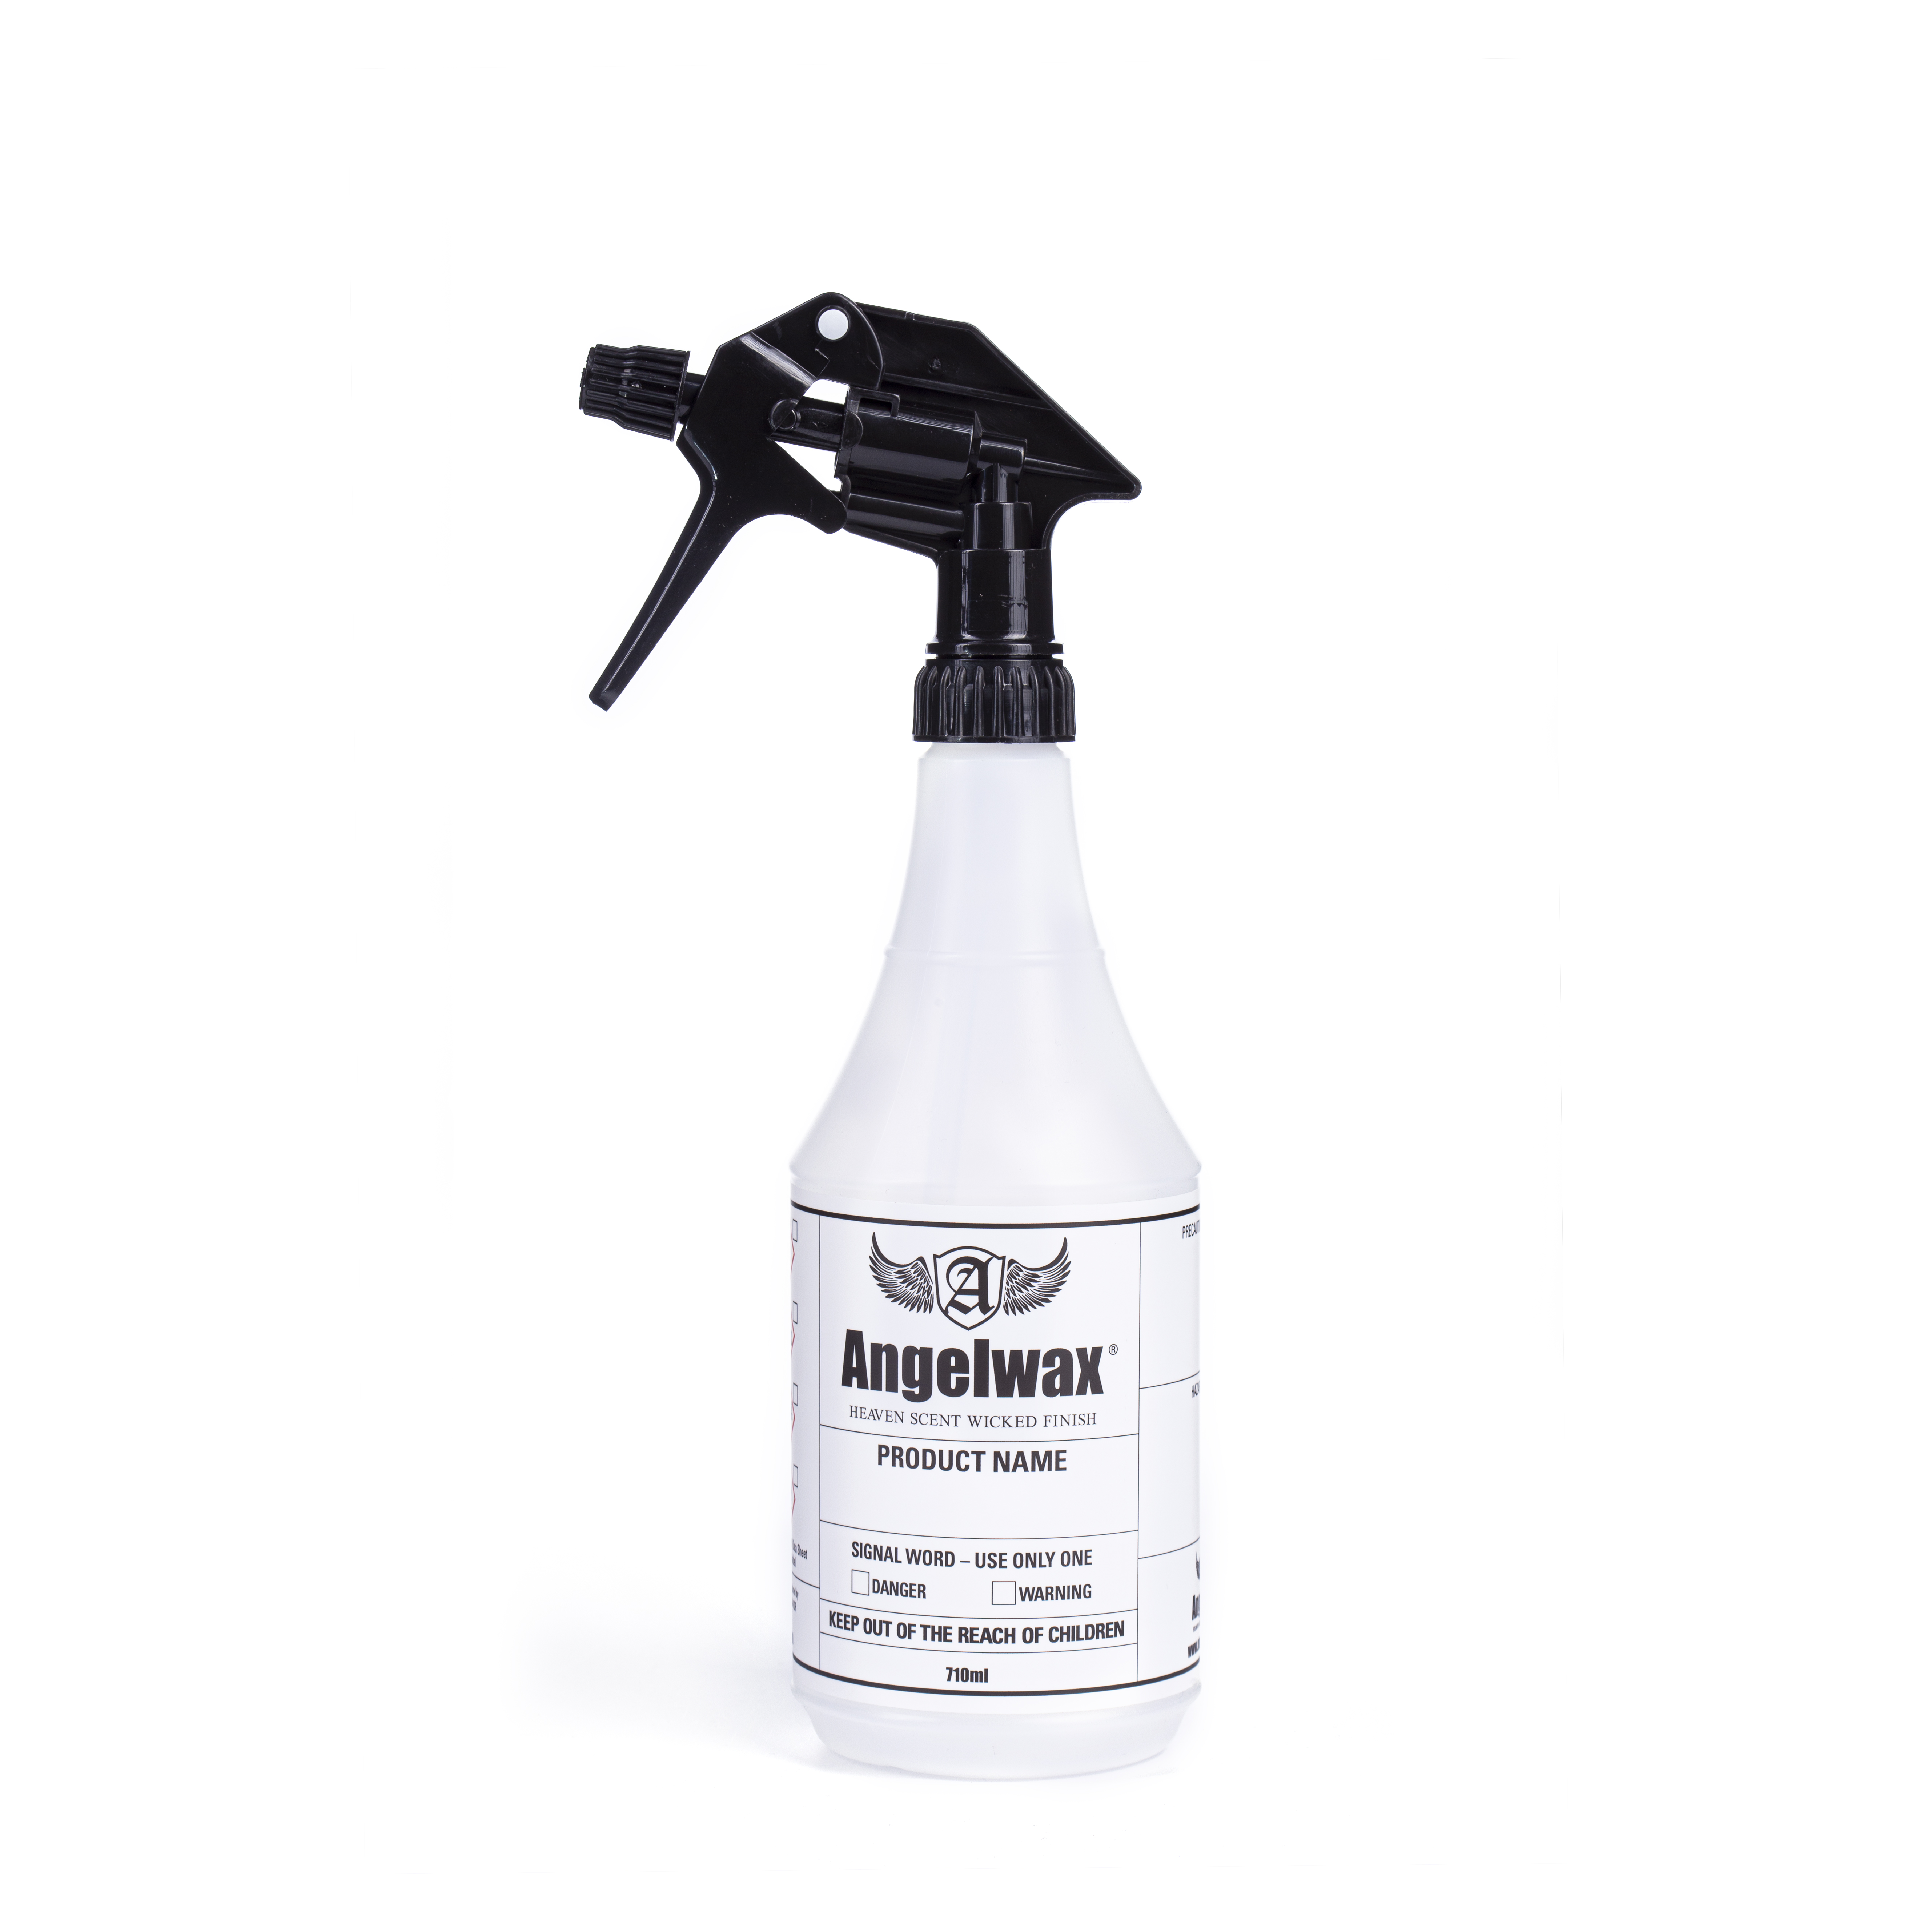 Chemical Resistant Heavy-Duty Bottle & Sprayer - Angelwax Car Care